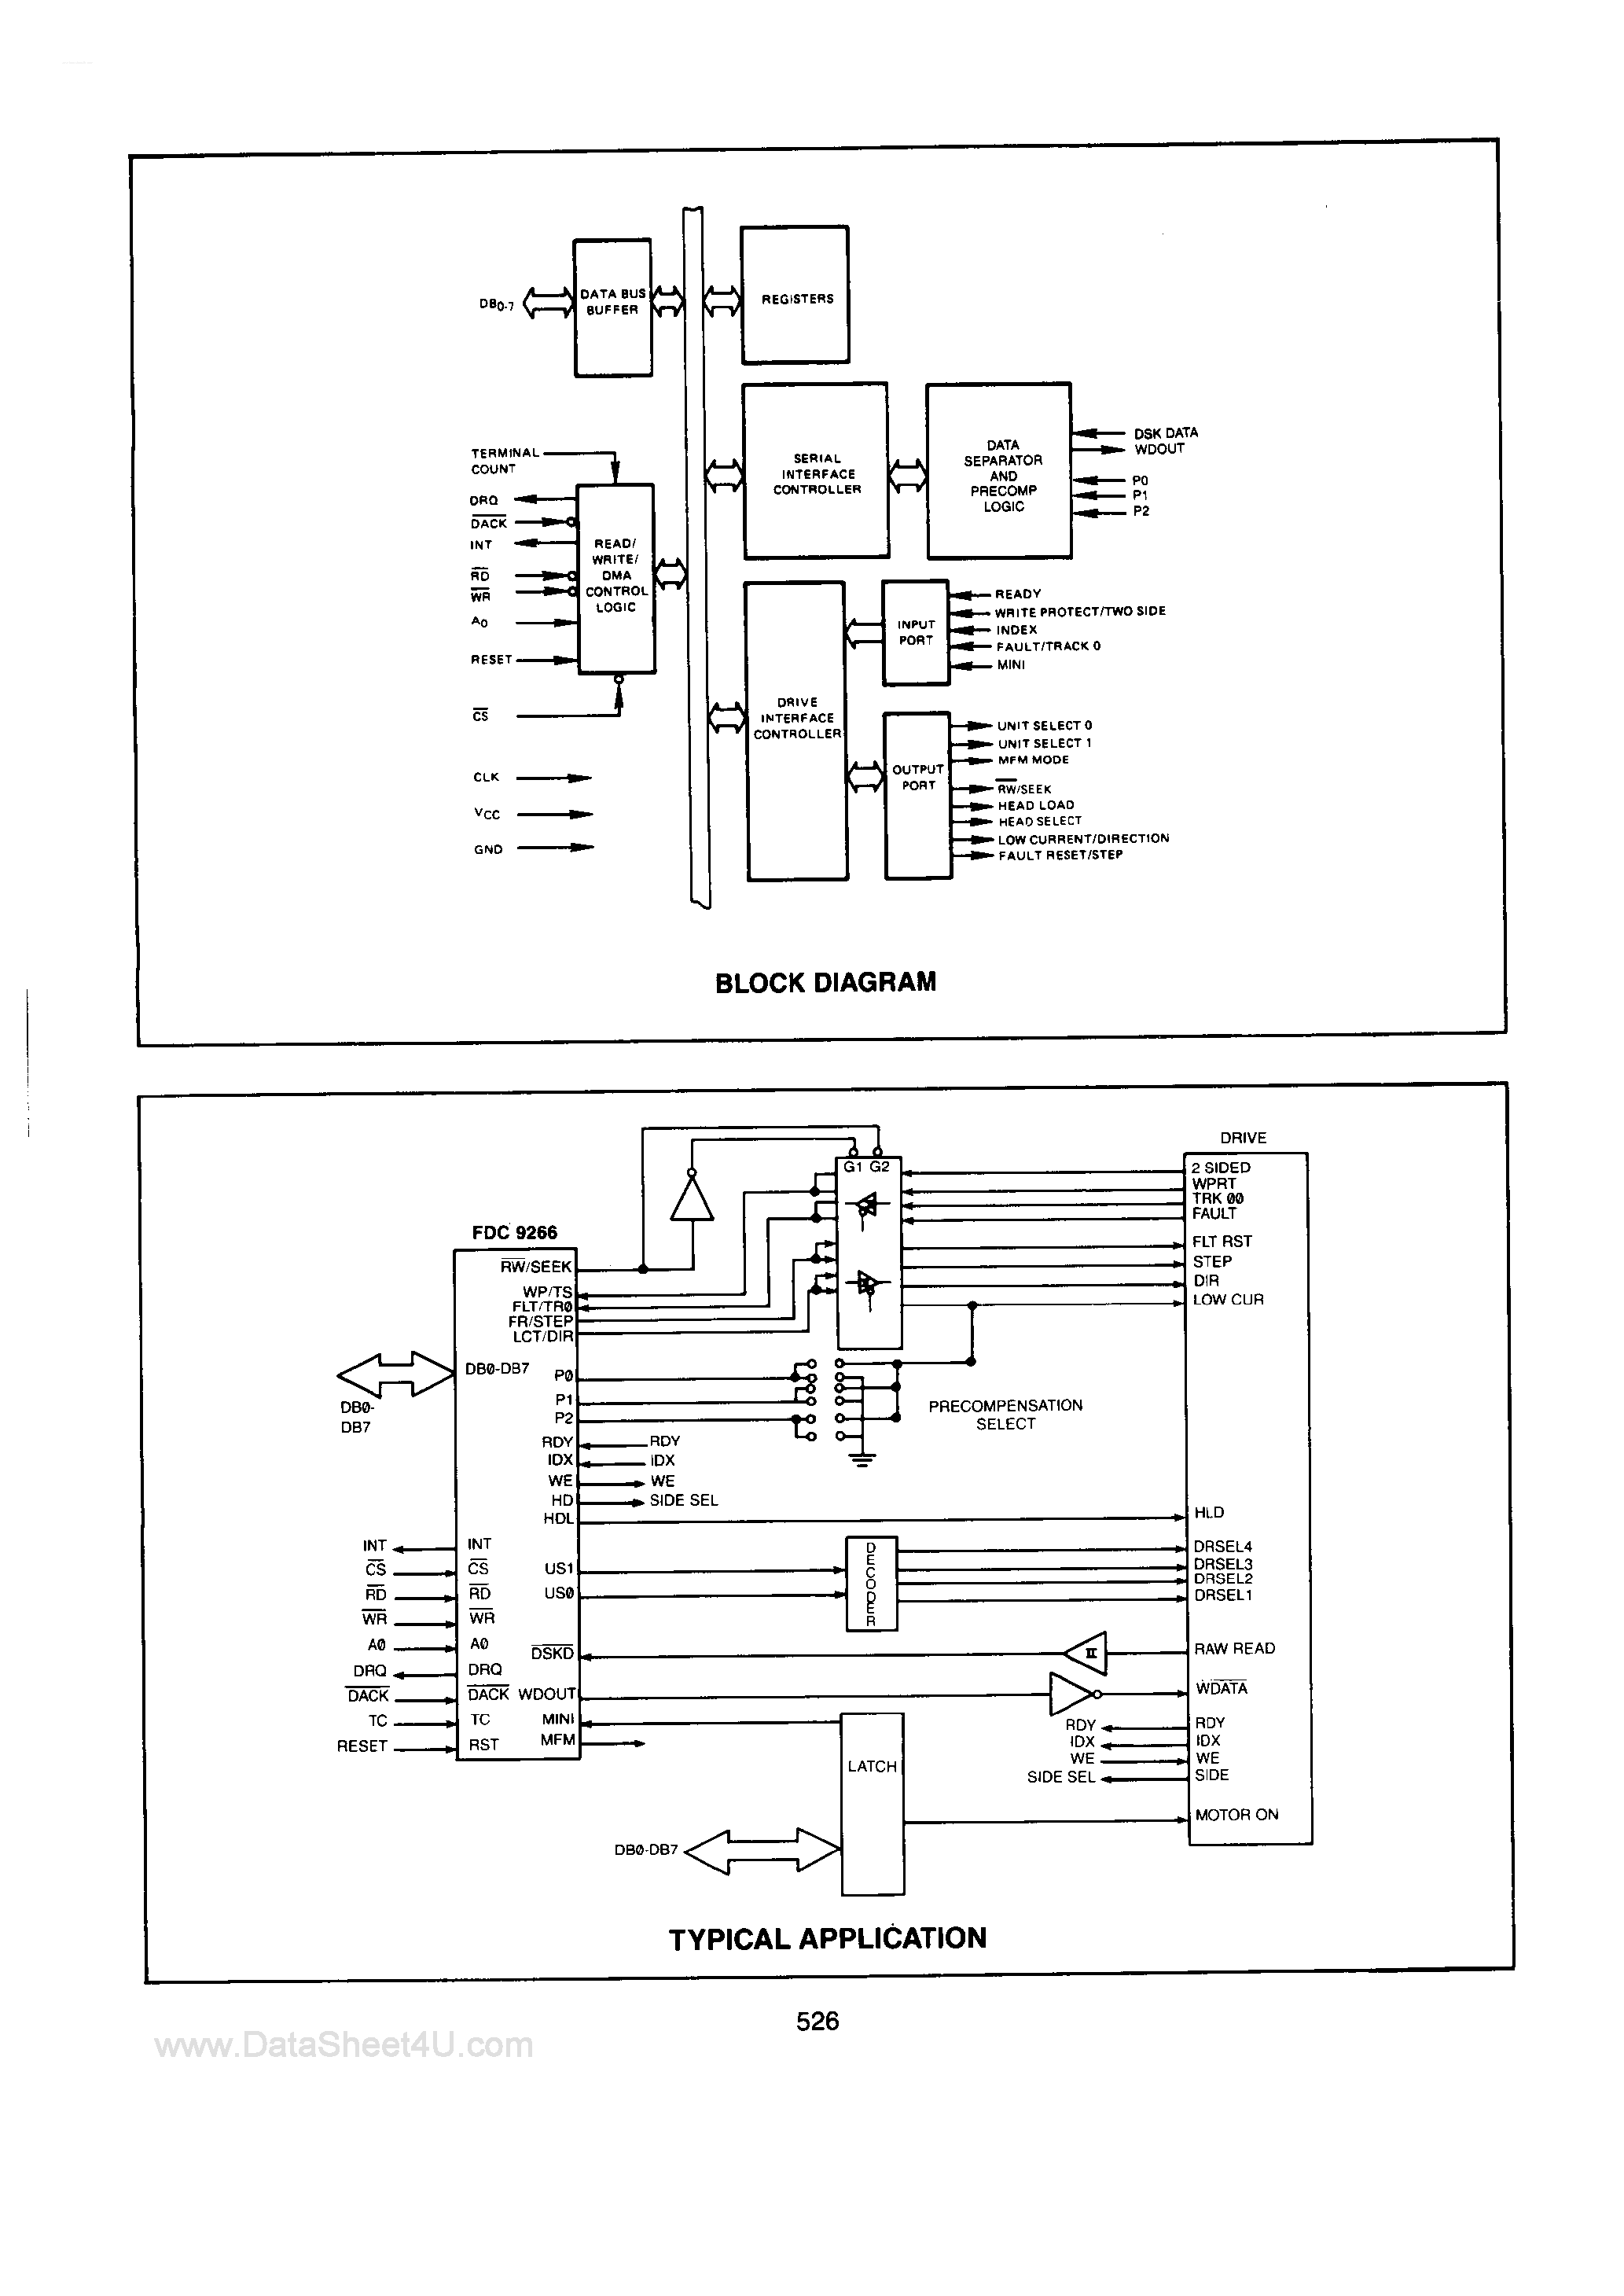 Datasheet FDC9266 - Single/Double Density Enhanced Floppy Disk Controller page 2